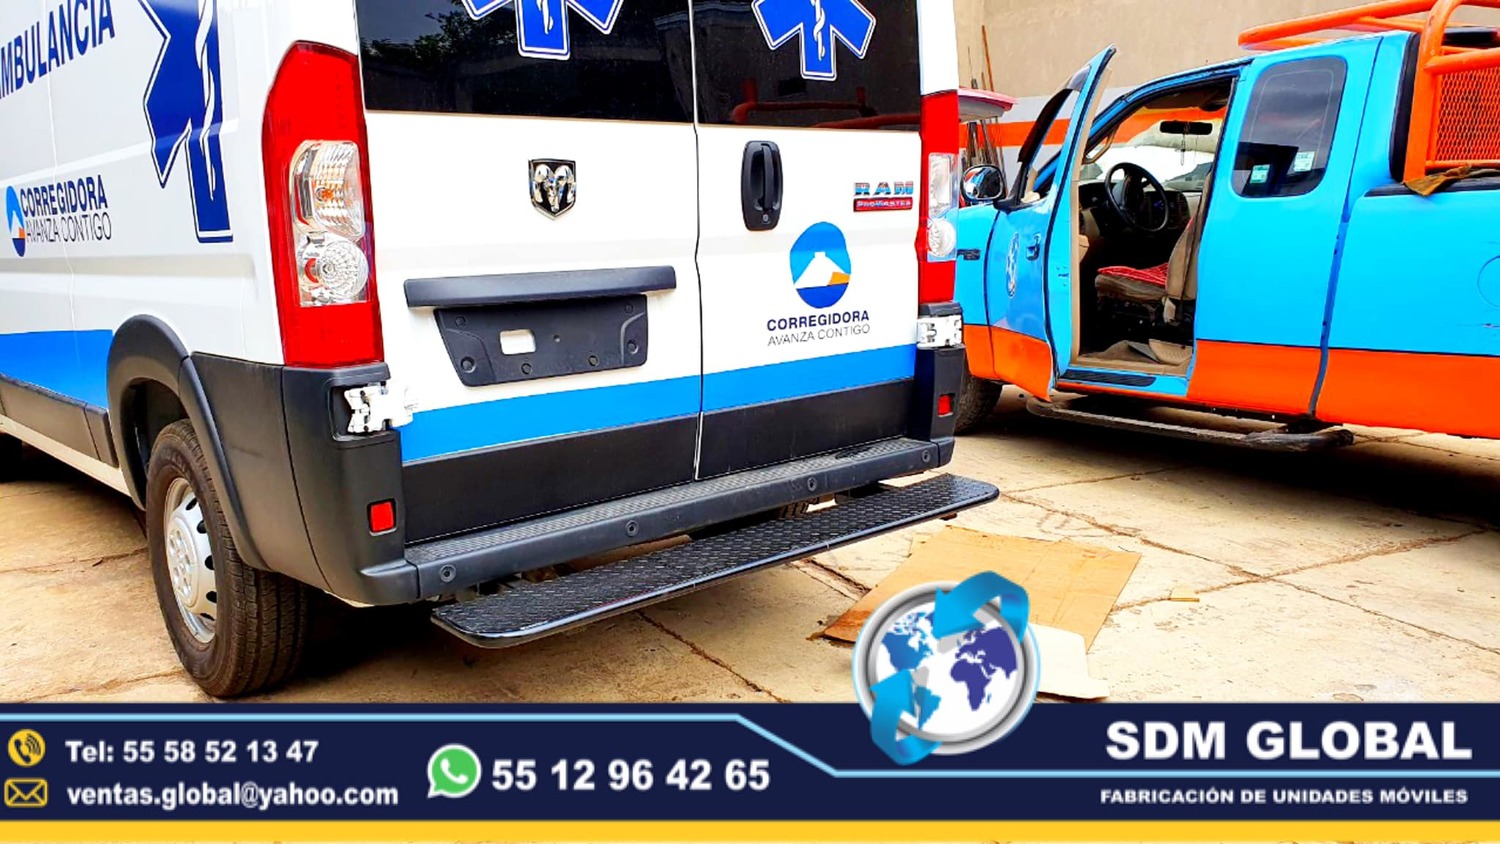 <span style="font-weight: bold;">Fabricantes de Ambulancias de traslado en SDM Global Mexico</span><br>